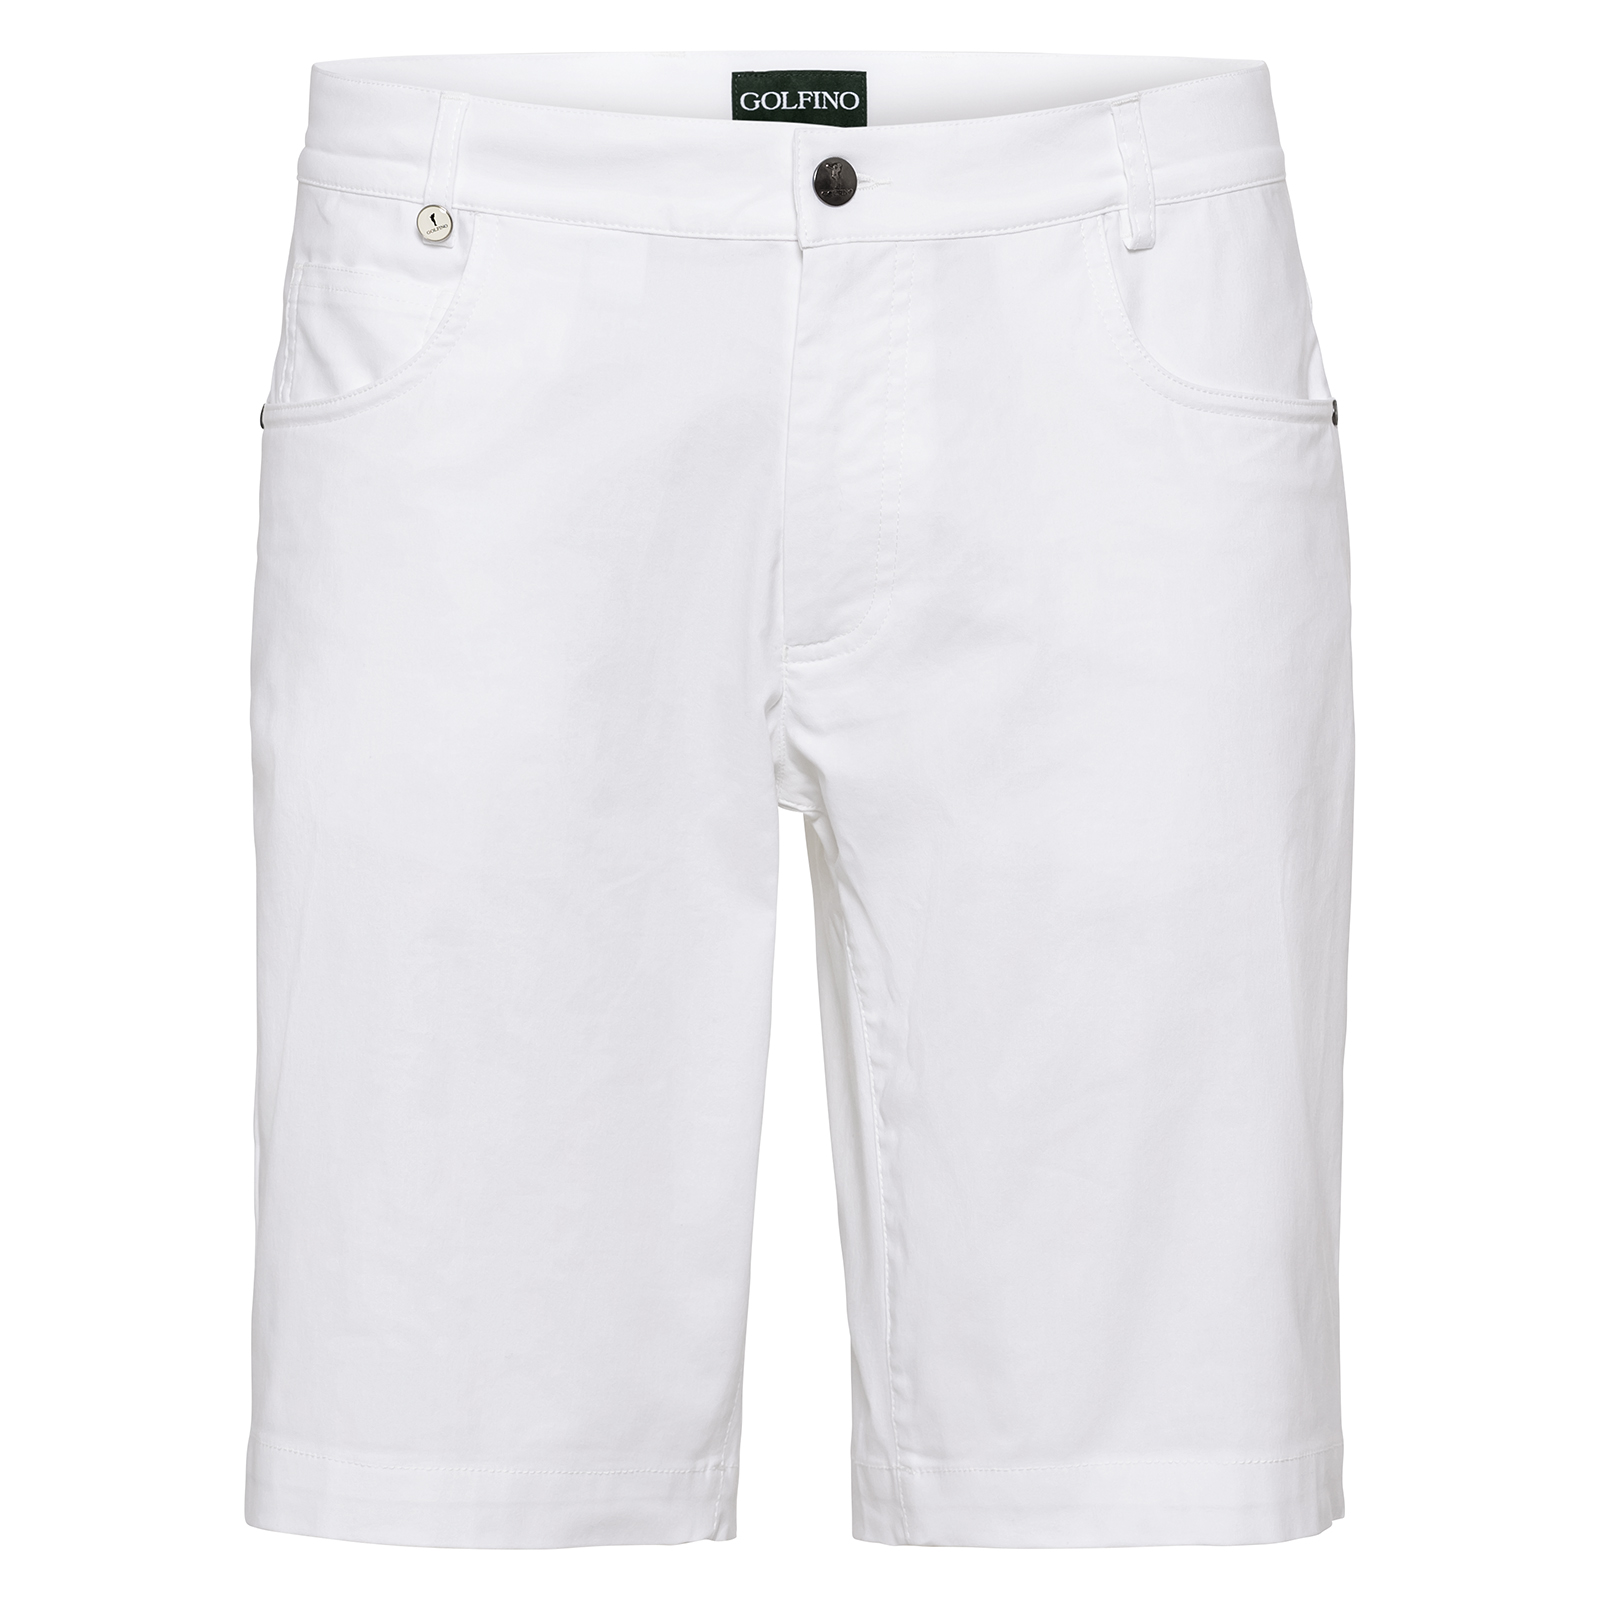 Practical 5-pocket style men's golf Bermuda shorts 